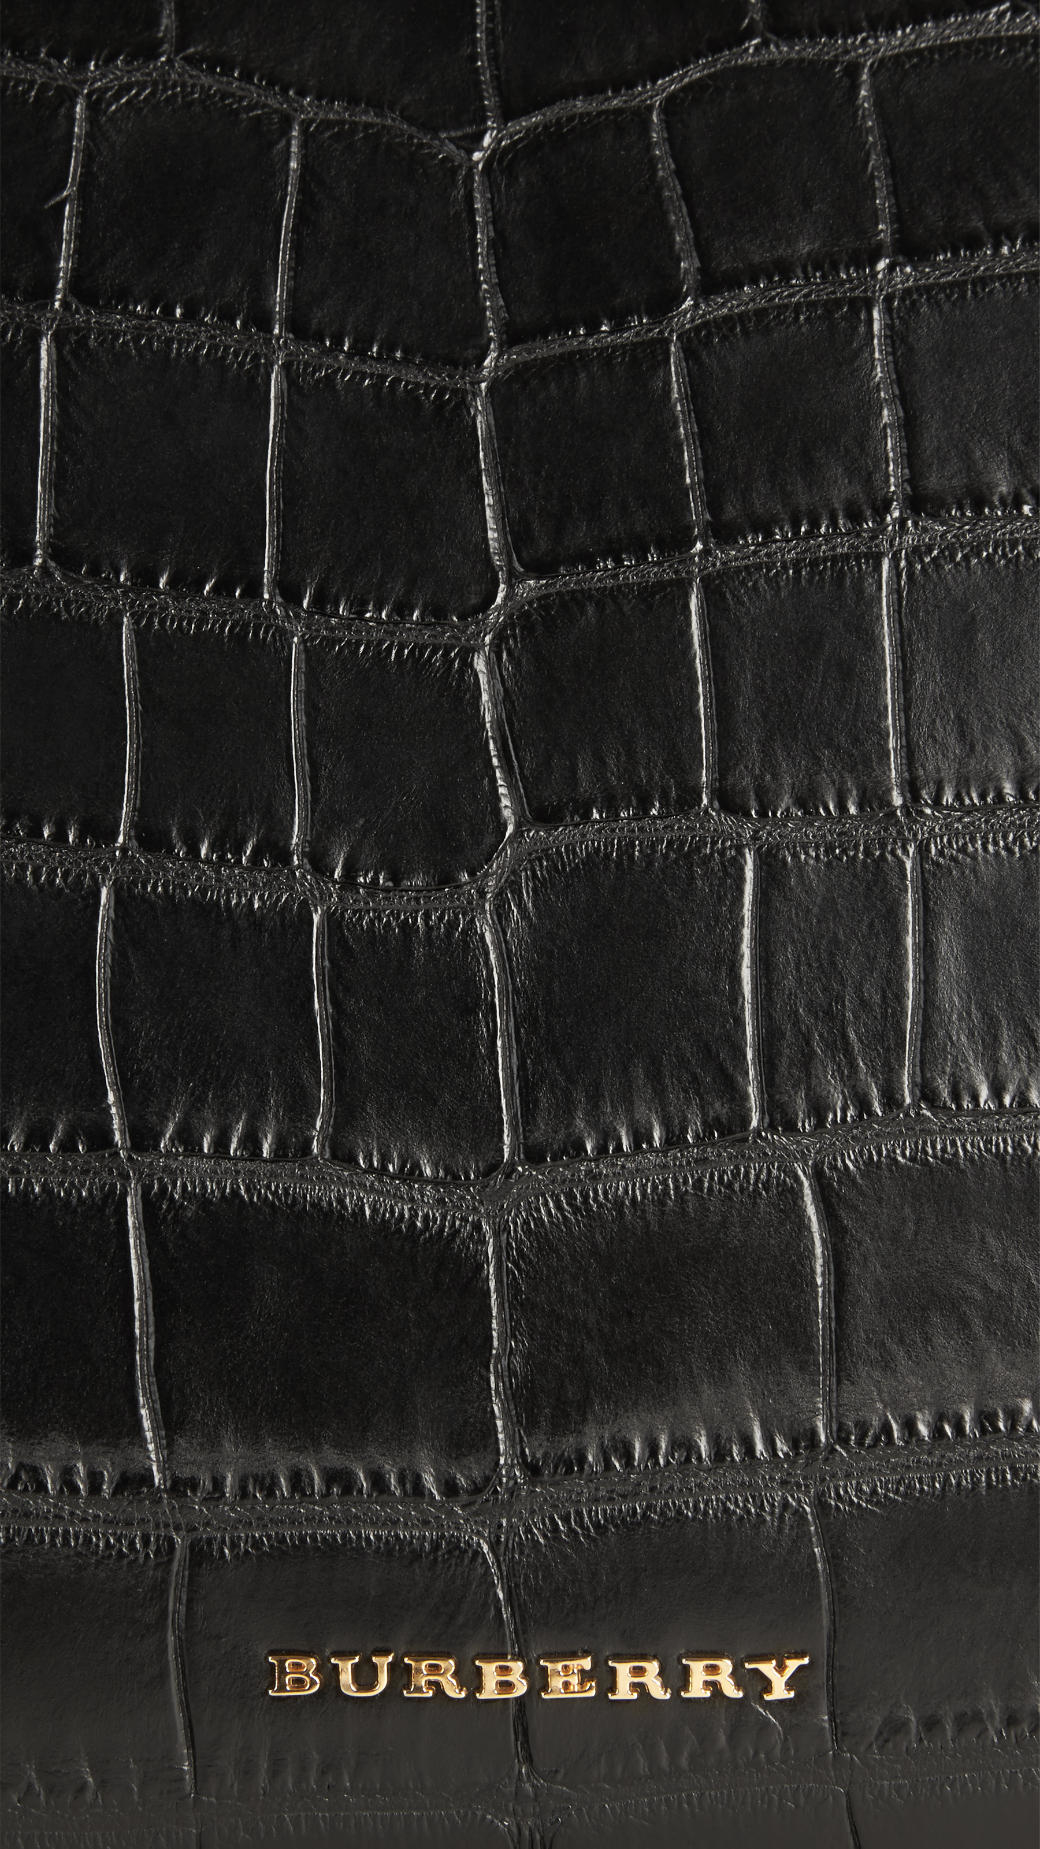 Burberry, Accessories, Black Textured Alligator Leather Ipad Case